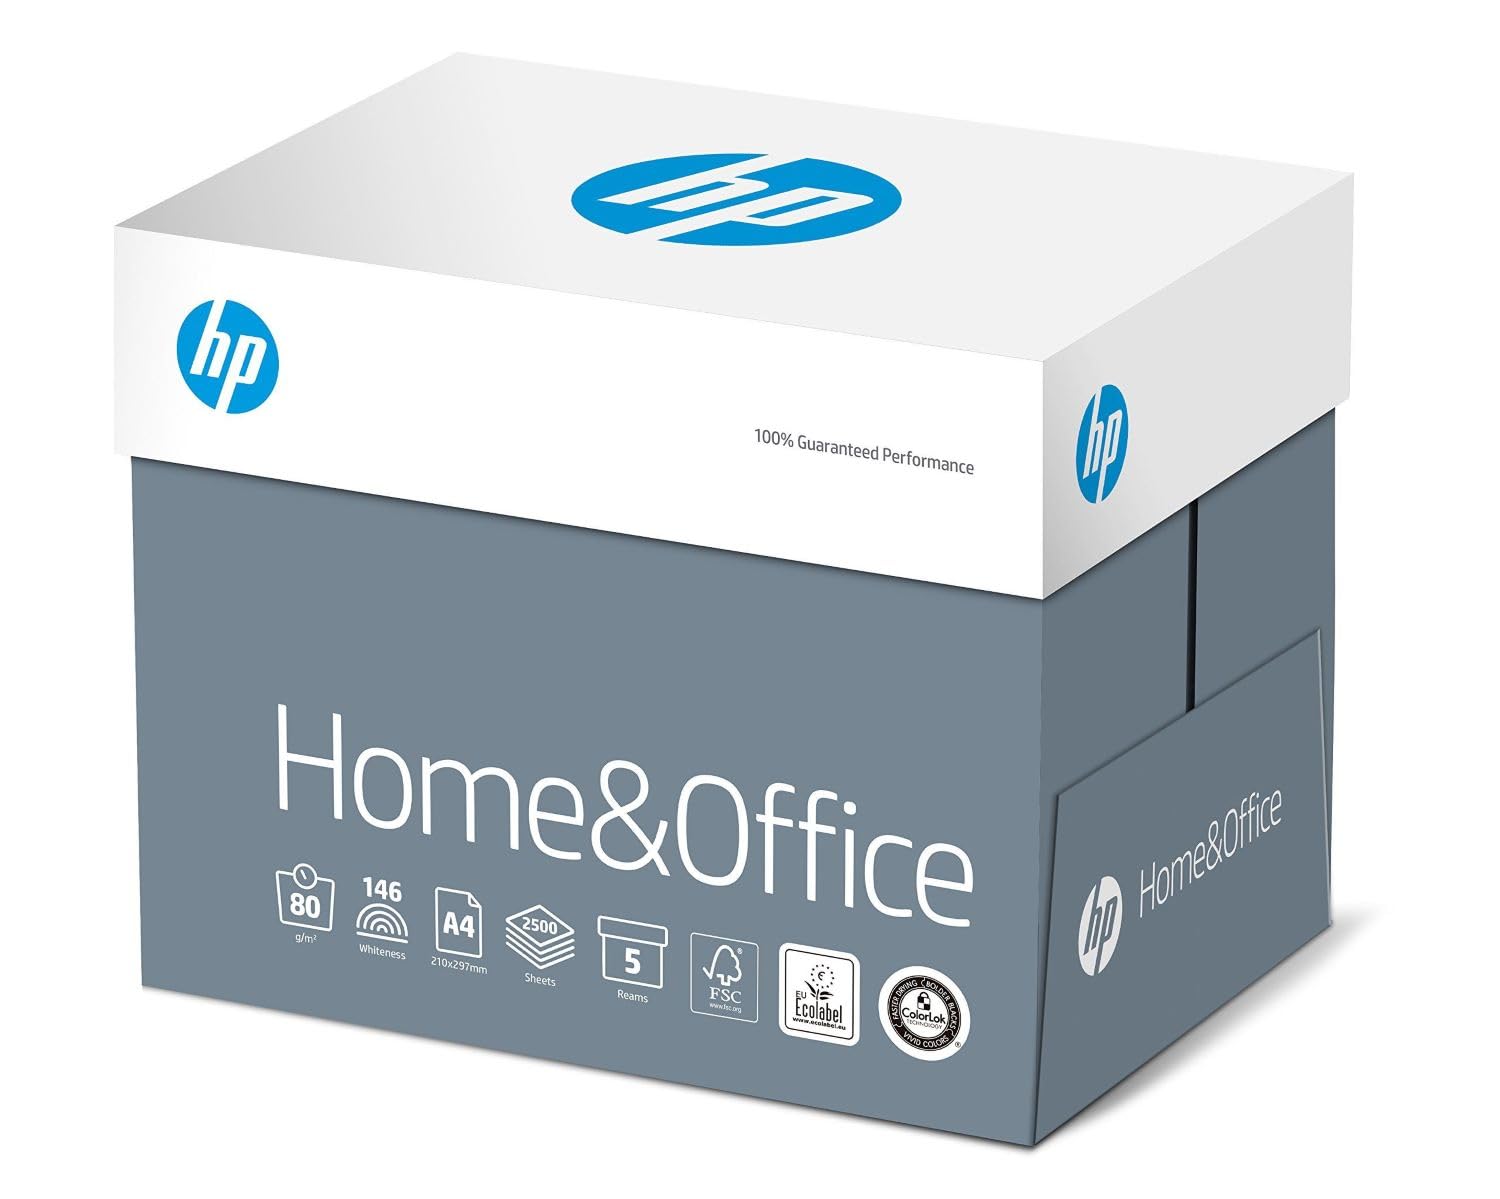 grand choix HP Home and Office - Papier Multifonction Blanc 80 g/m² A4 - Carton de 5 x 500 Feuilles pEqsRQRUj grand